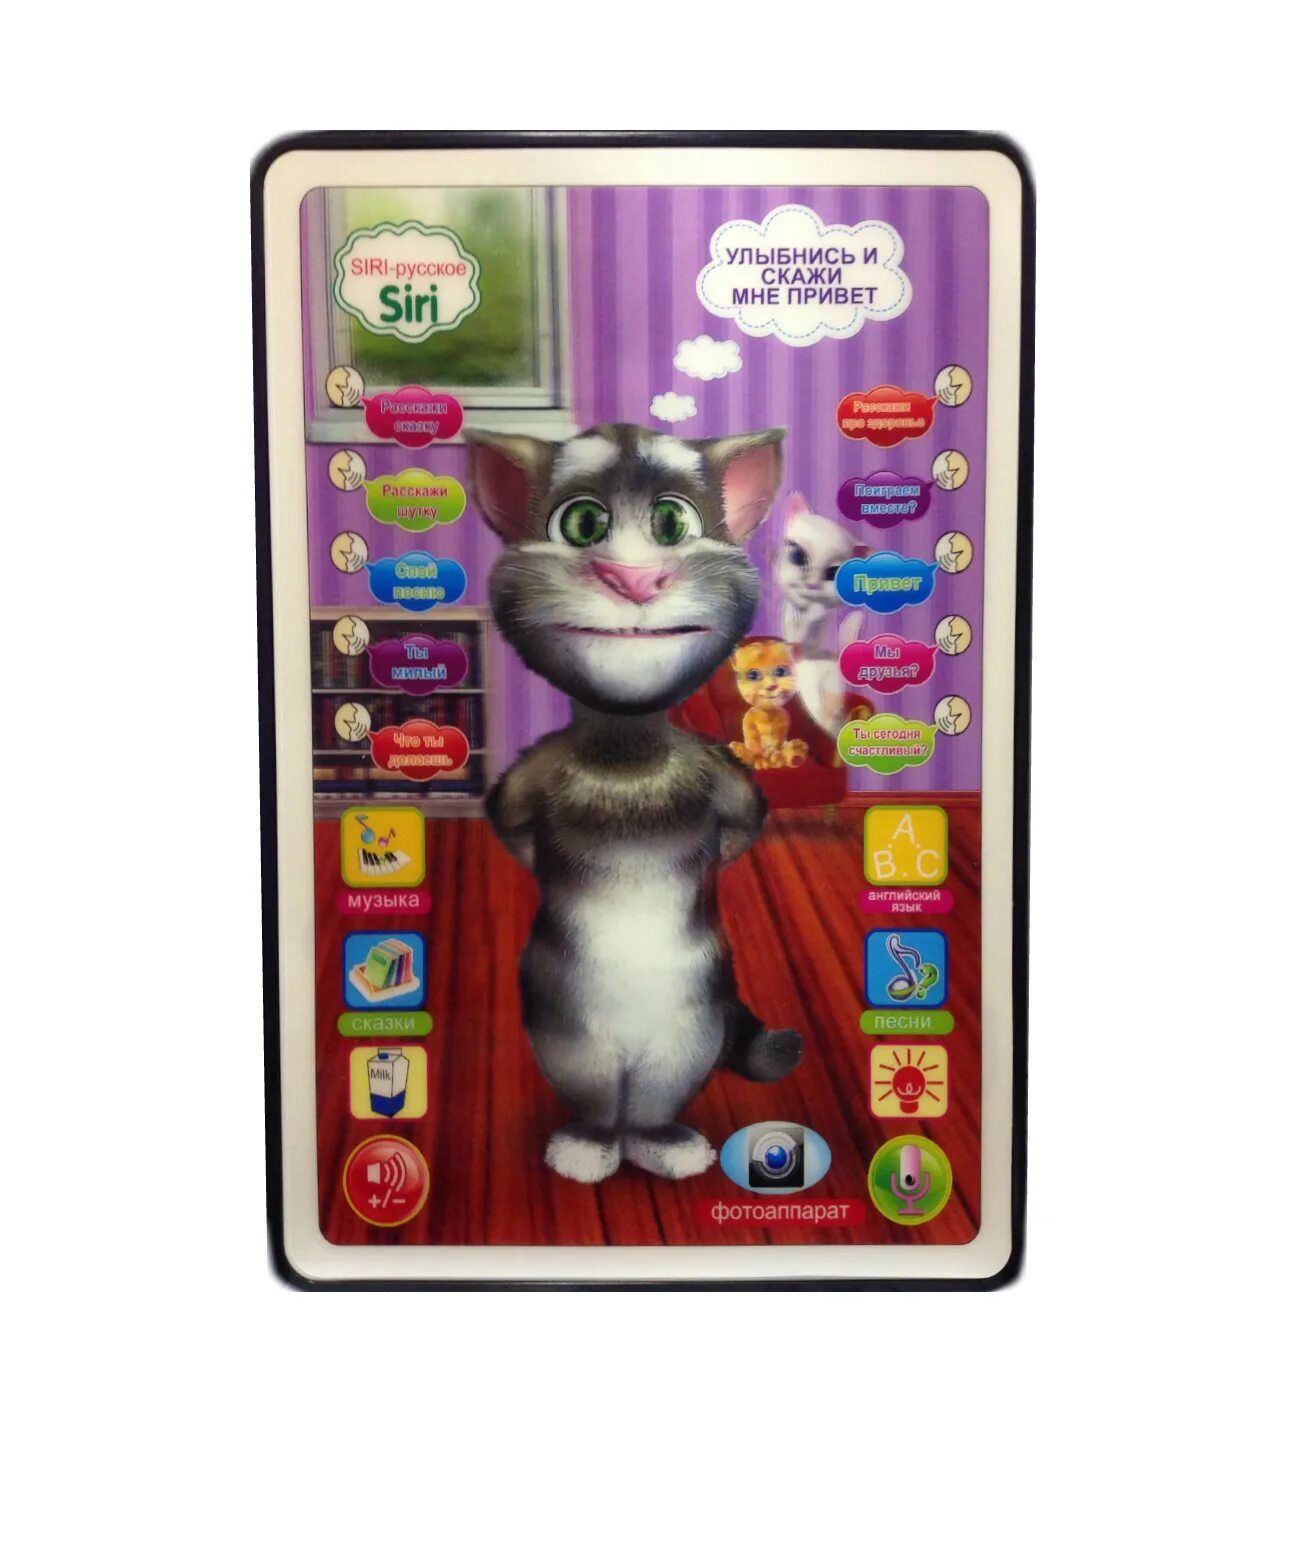 Tom html. Интерактивный планшет Джинджер. Интерактивные планшет котик Джинджер. Игрушечный планшет кот том. Кот том игрушка интерактивная.